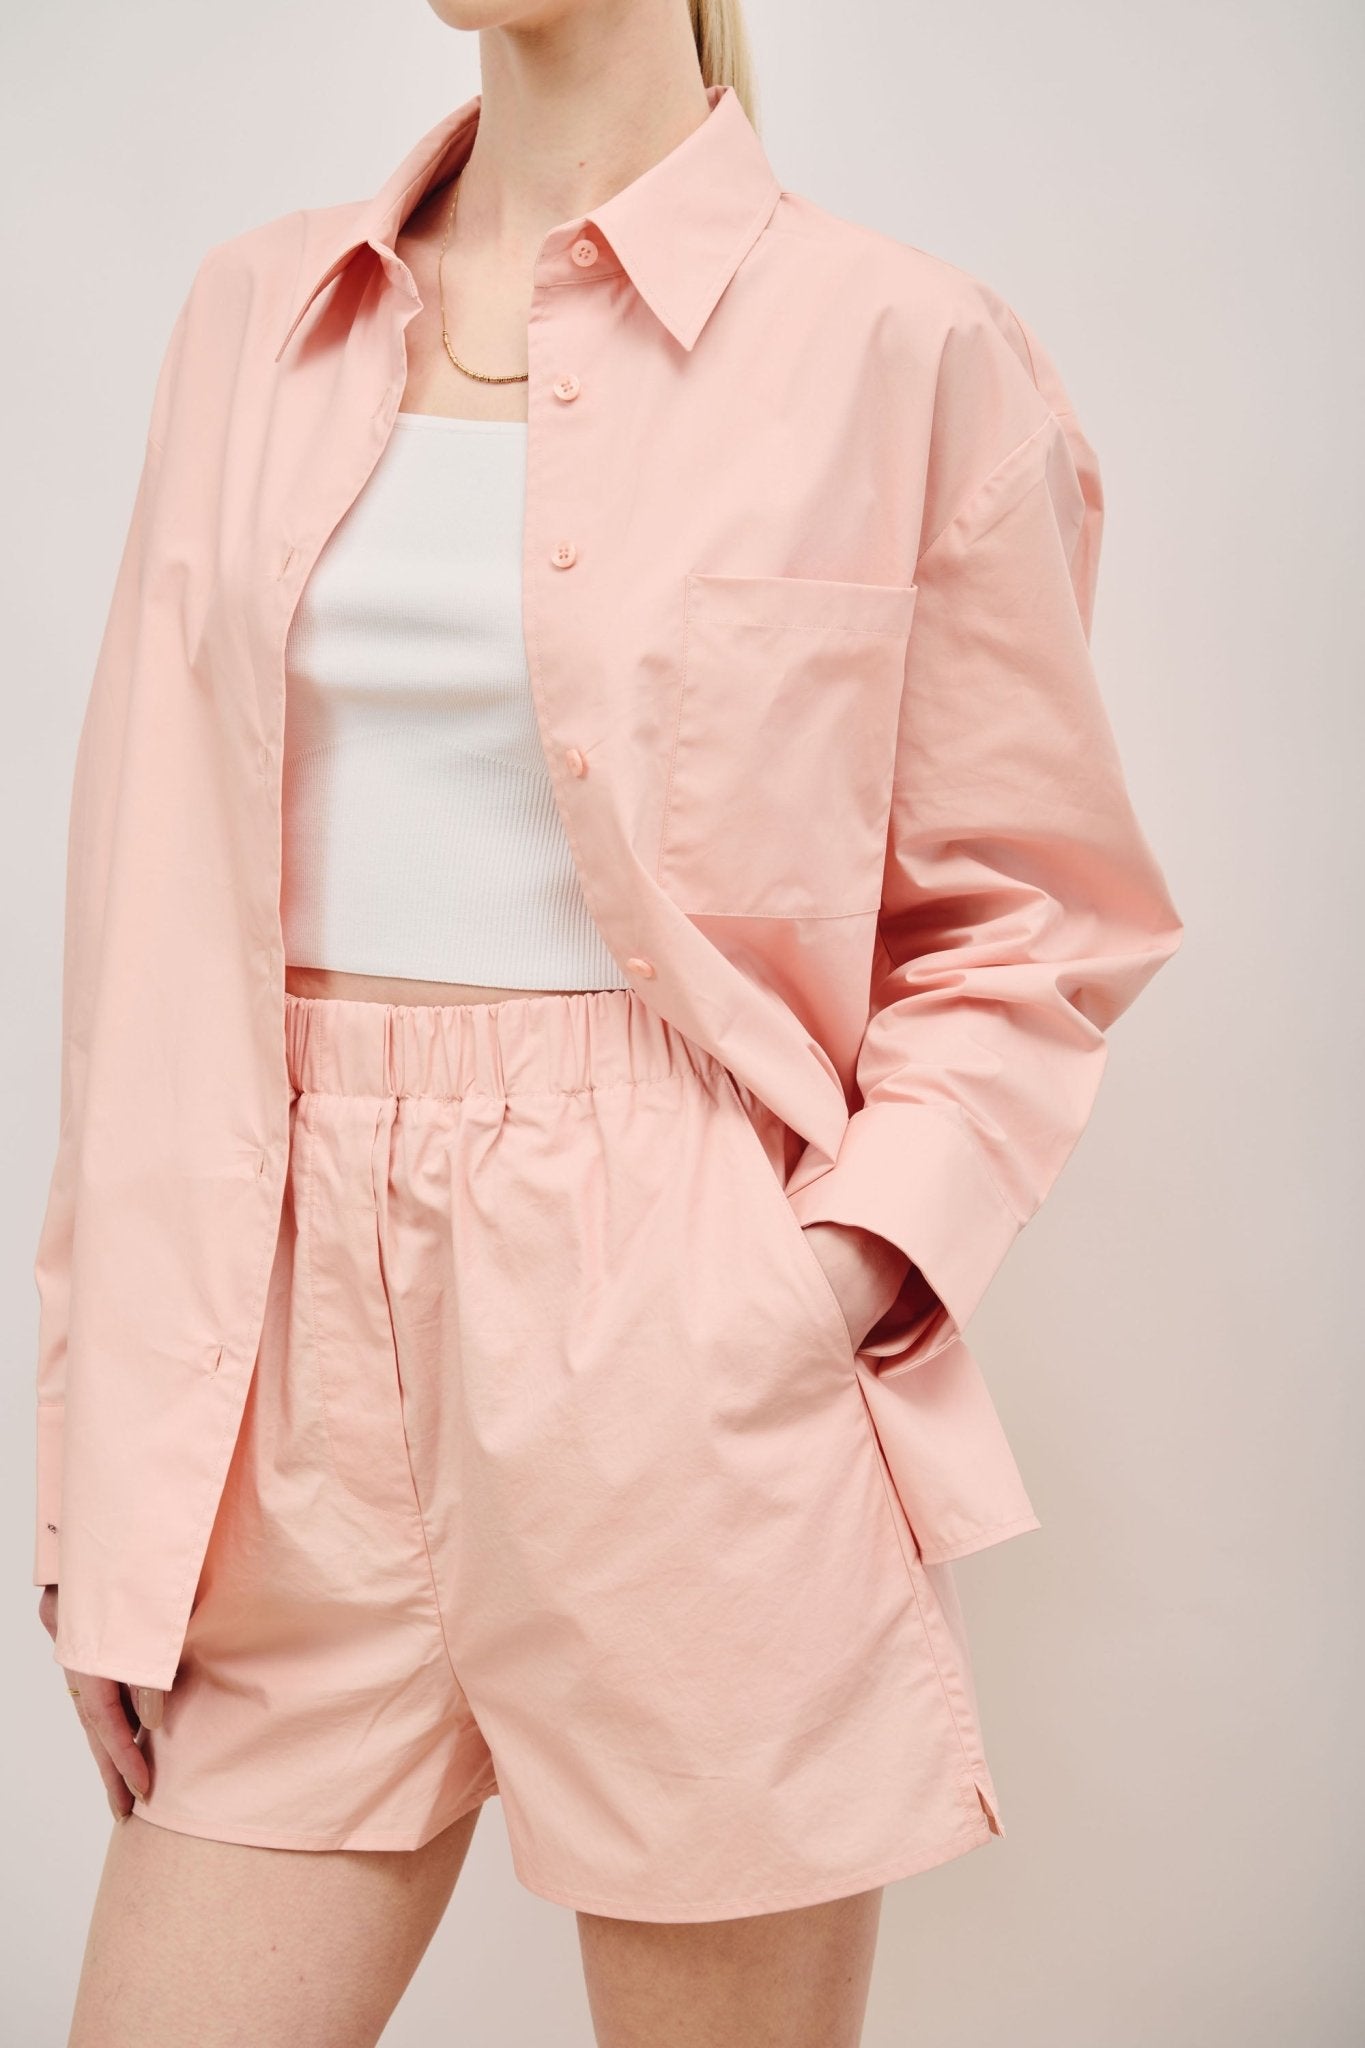 LUI cotton shorts (Pink) - STELLAM